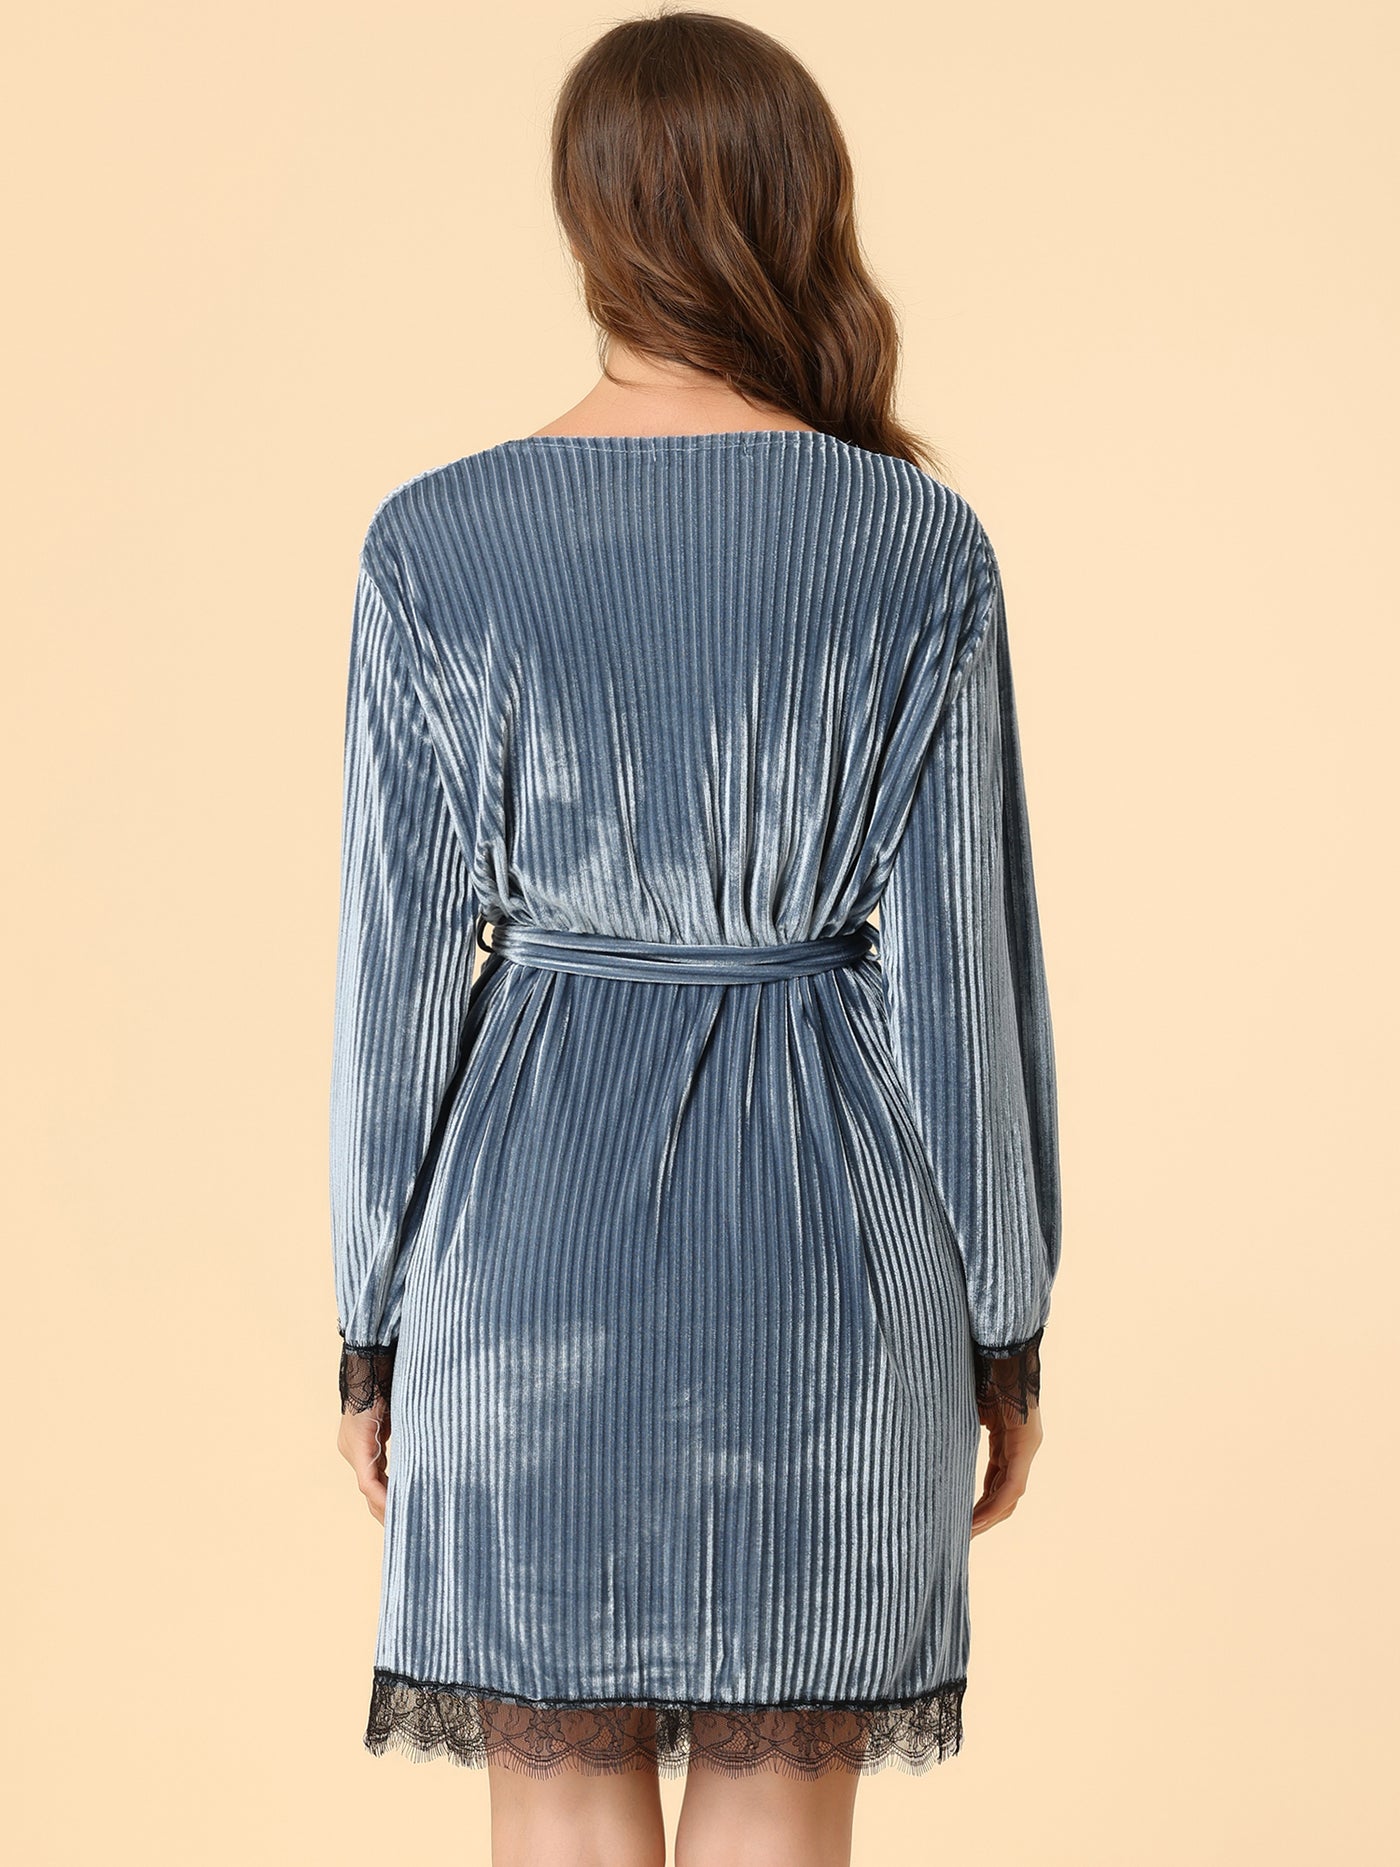 Allegra K Velvet Sexy Spaghetti Strap Cami Dress Midi Robe Pajama Set